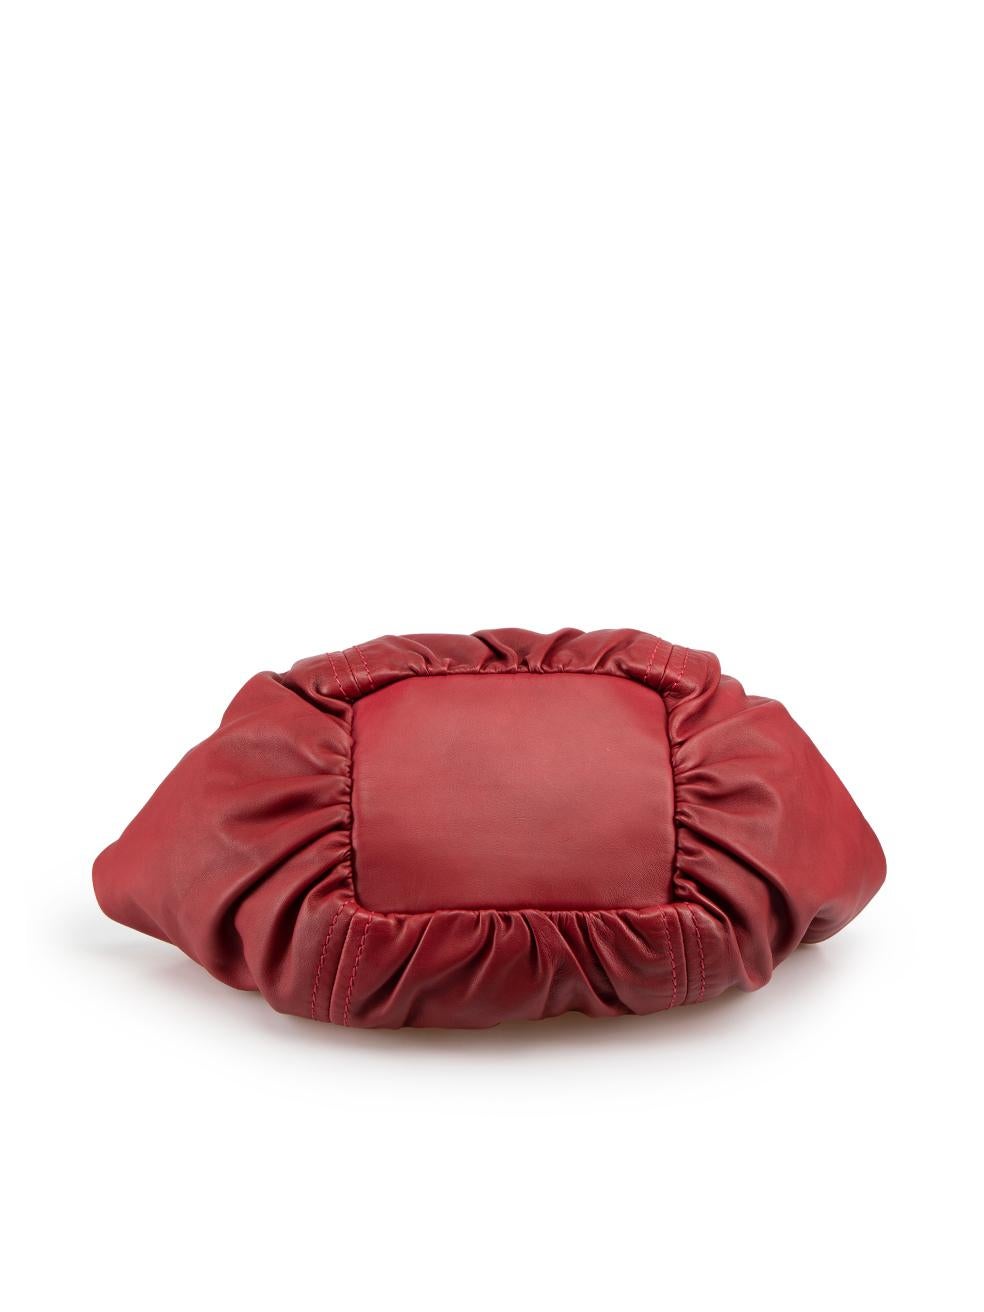 Women's Jimmy Choo Red Leather Shoulder Bag